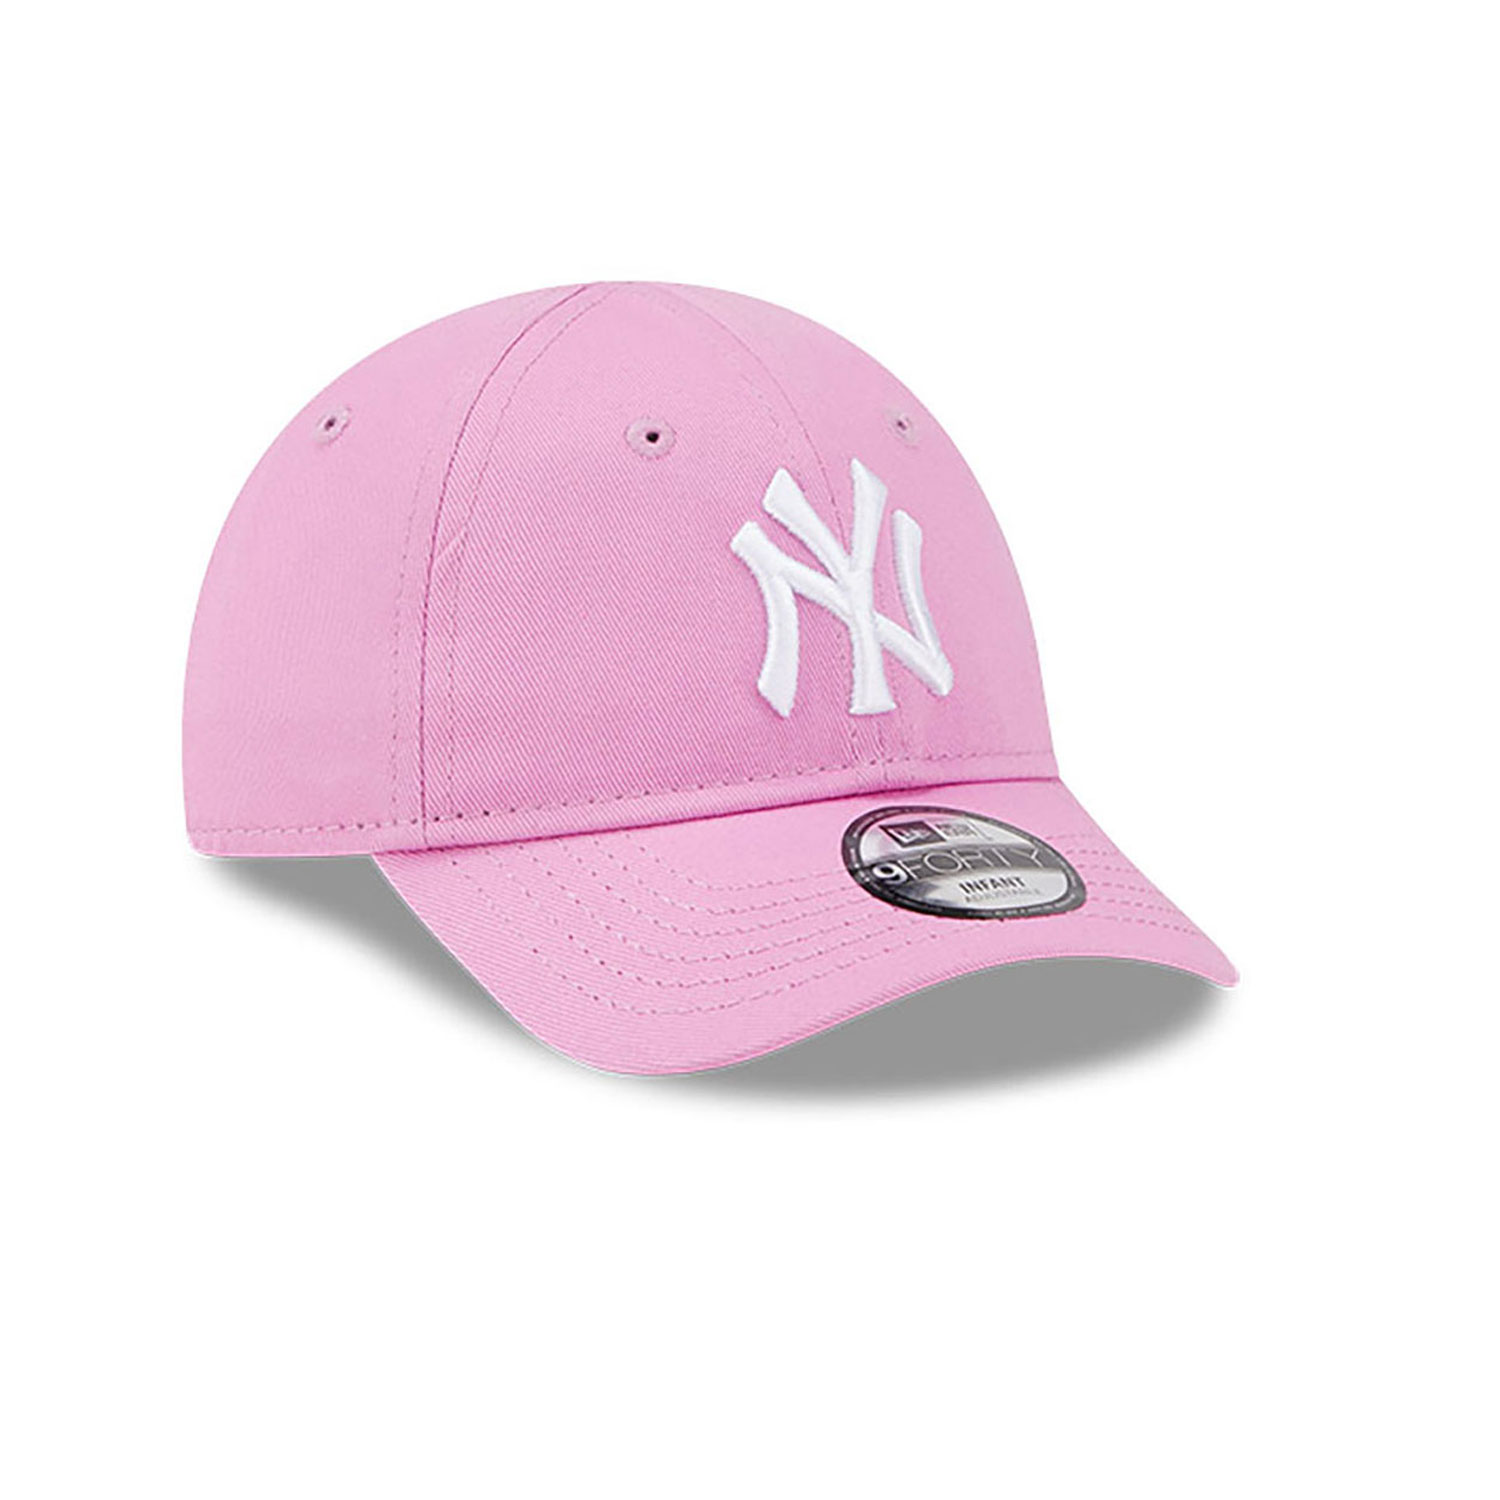 New Era New York Yankees 9forty Adjustable Cap League Essential